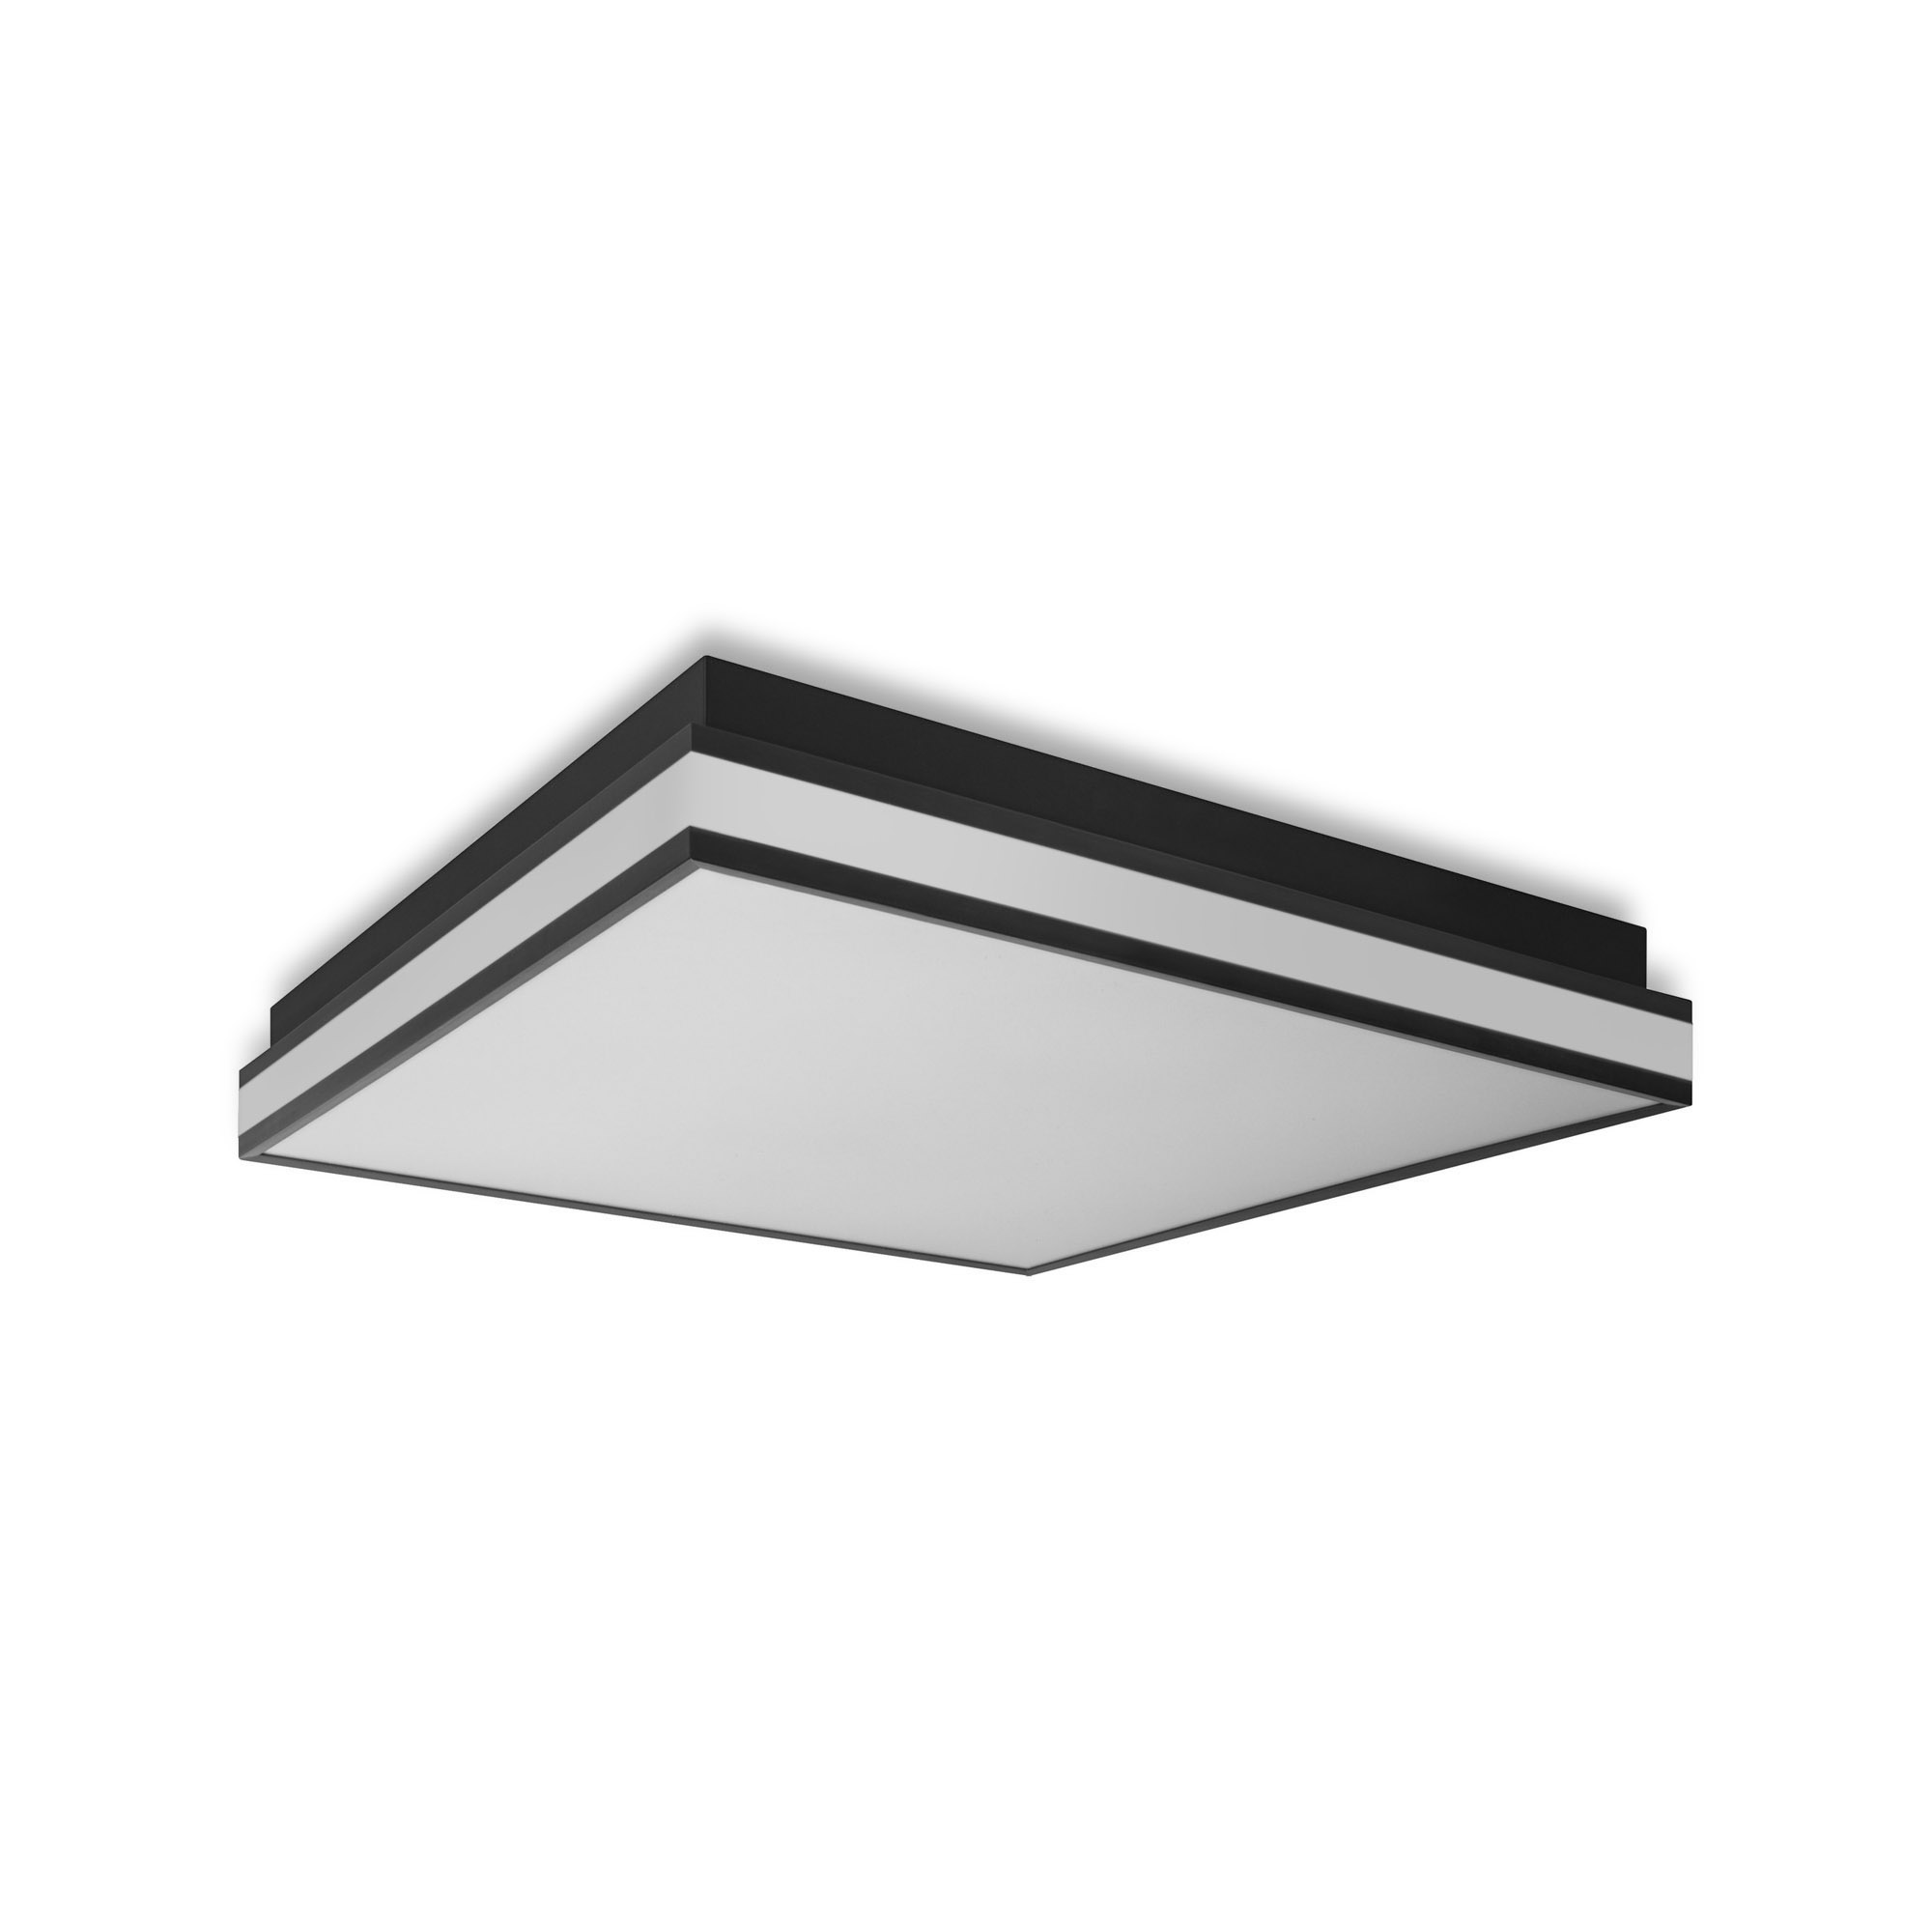 LEDVANCE SMART+ WiFi Tunable White LED Ceiling Light ORBIS MAGNET 450x450mm black 4200lm